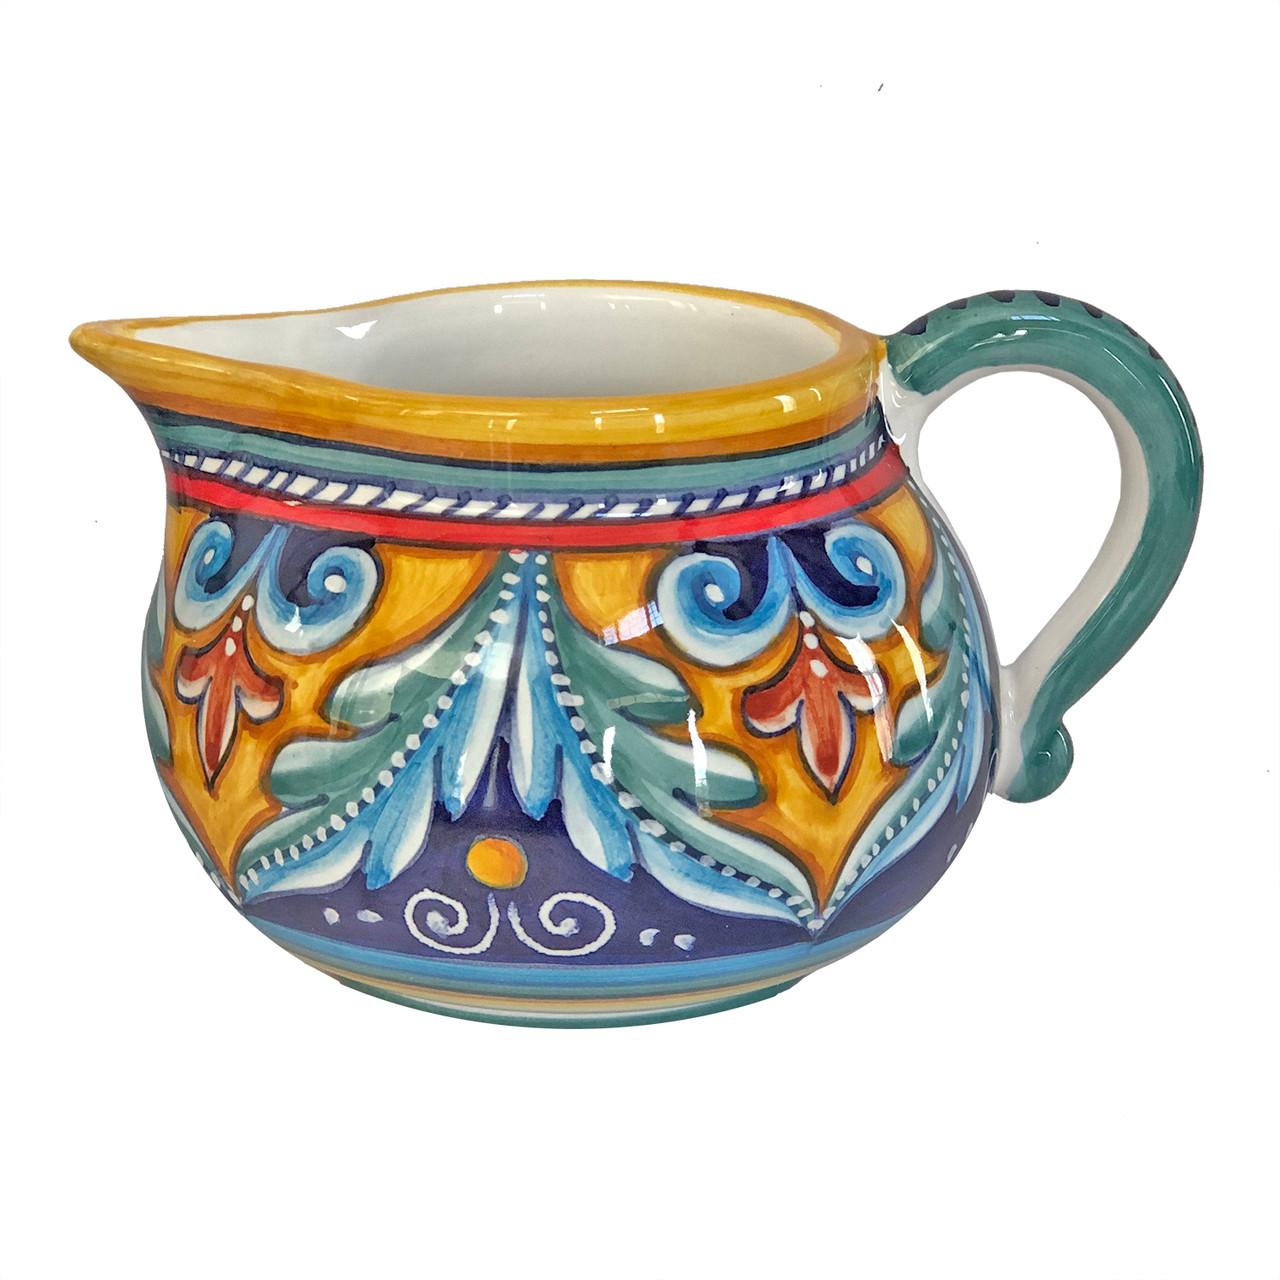 Pottery Jar Biscotti, Umbria Pattern